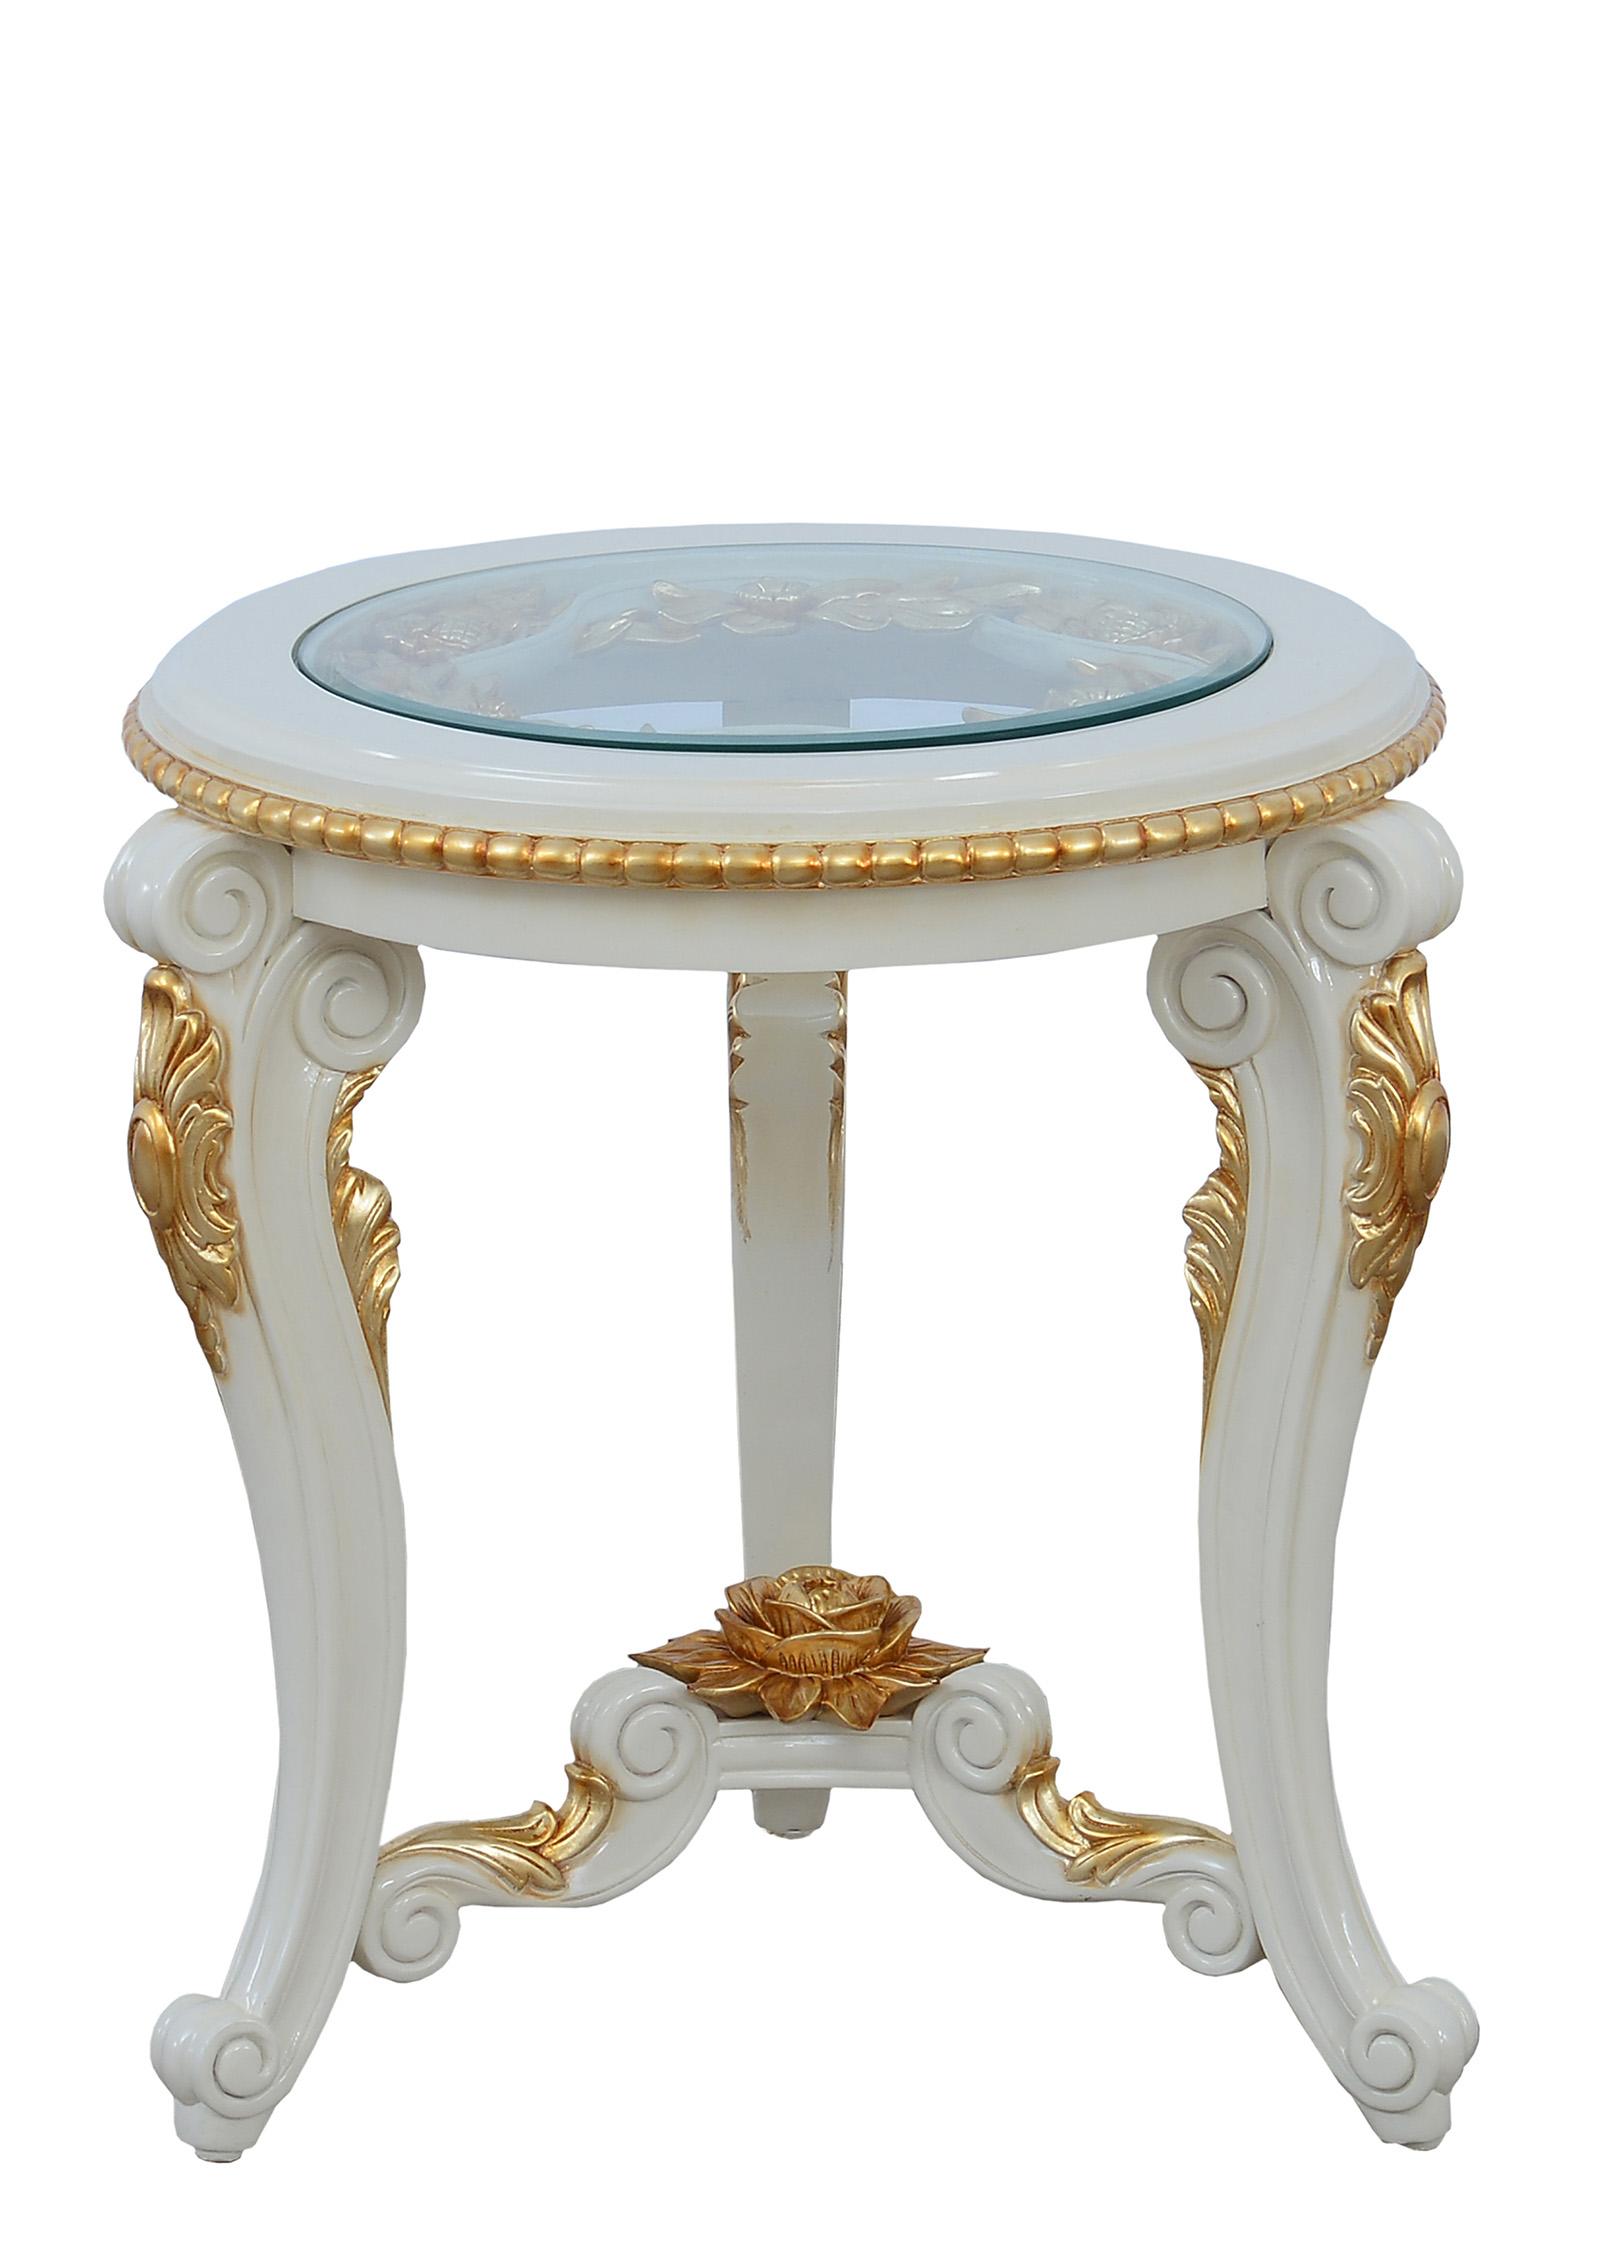 Antique Beige & Gold Luxury BELLAGIO Round Side Table EUROPEAN FURNITURE - image 1 of 3